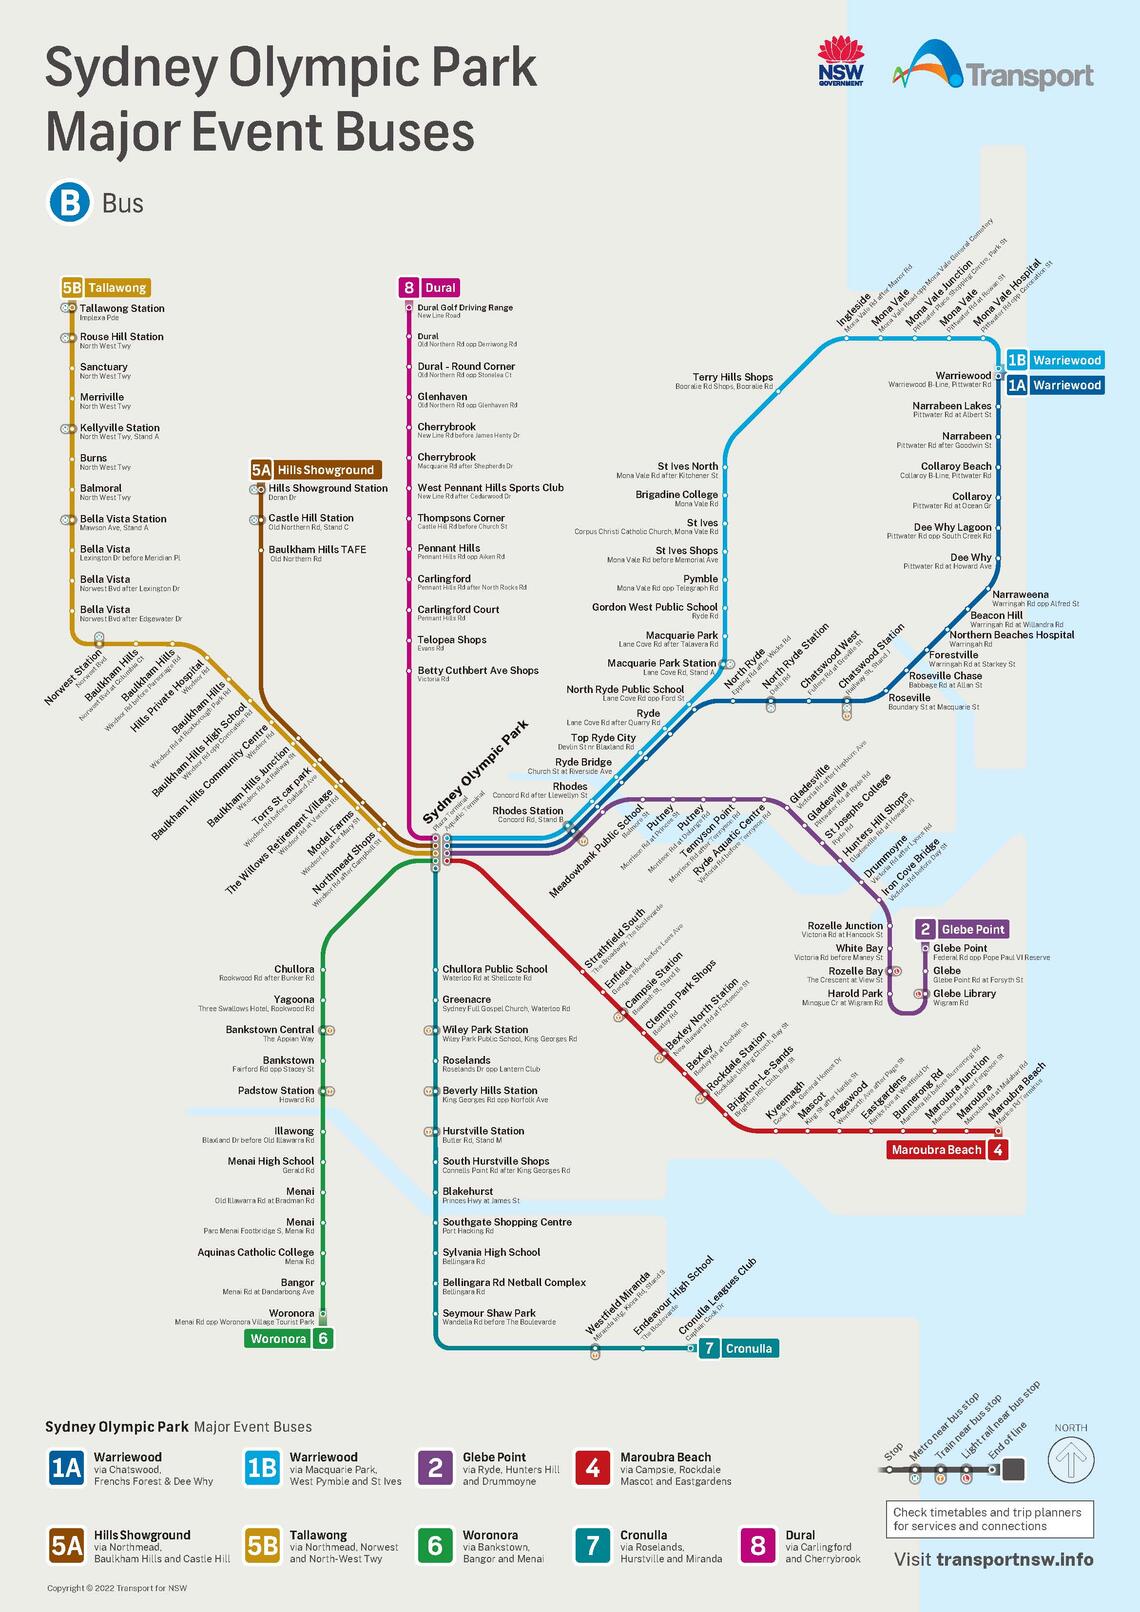 Sydney Olympic Park Major Event Bus route map